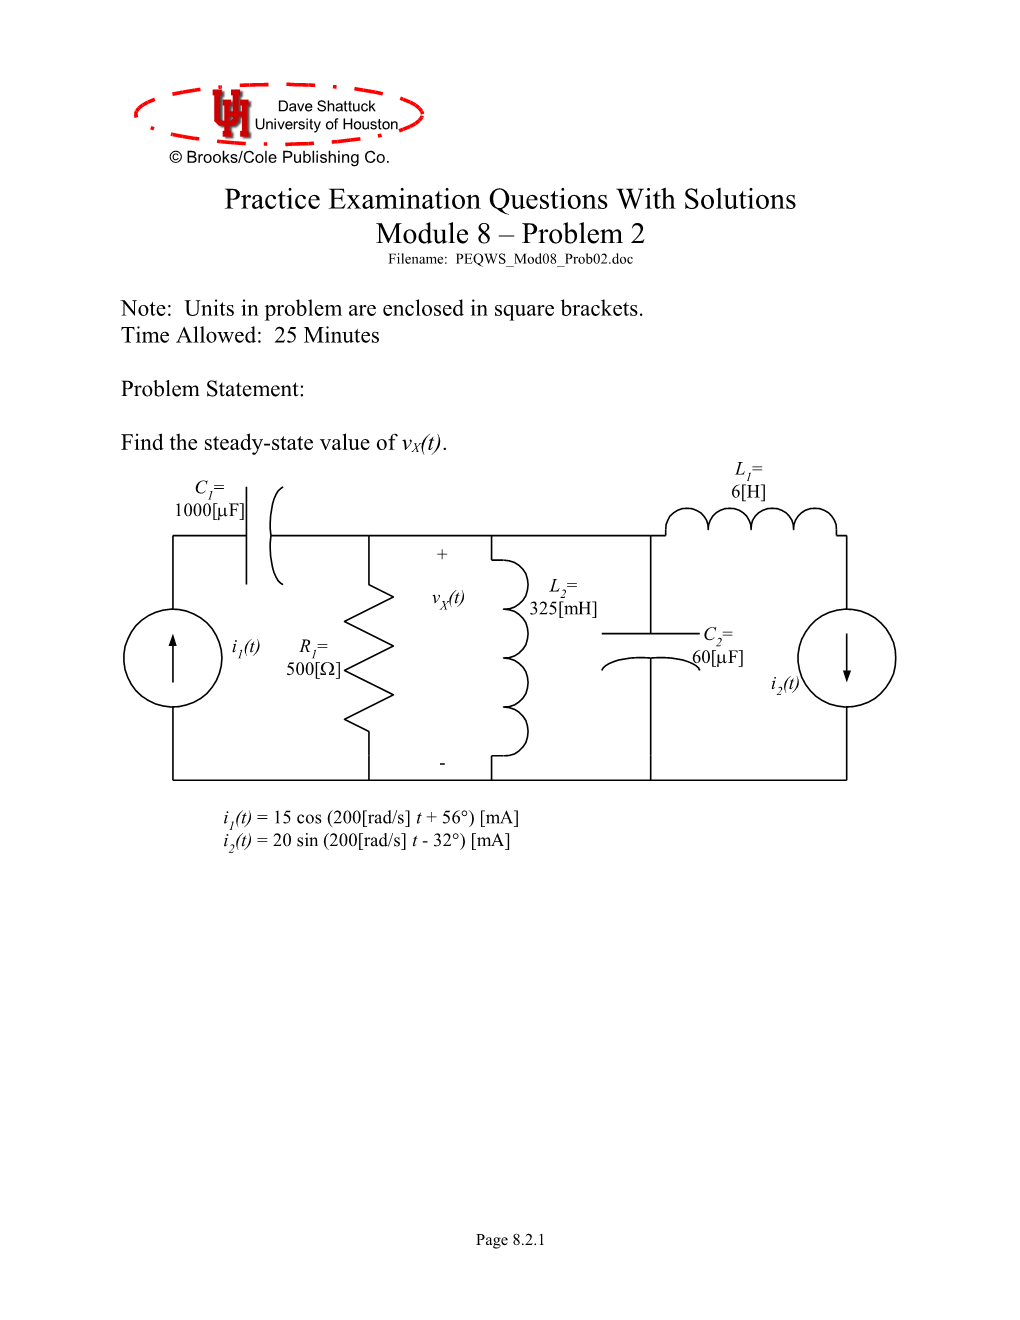 Practice Examination Module 8 Problem 2